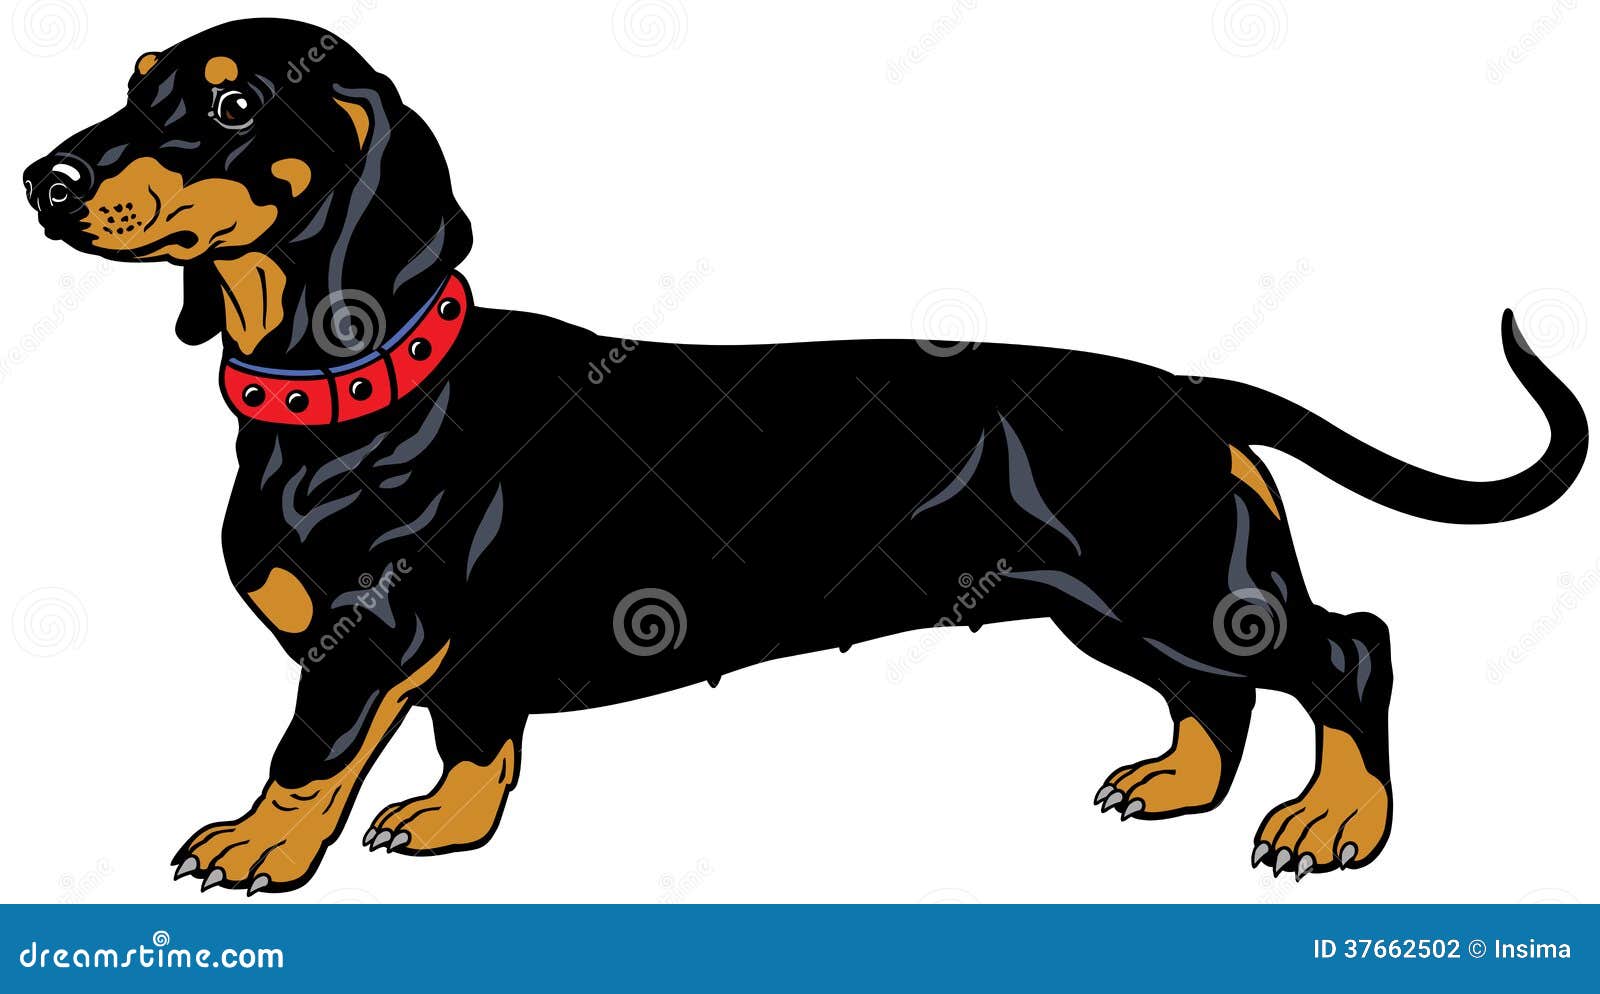 dachshund dog clipart - photo #29